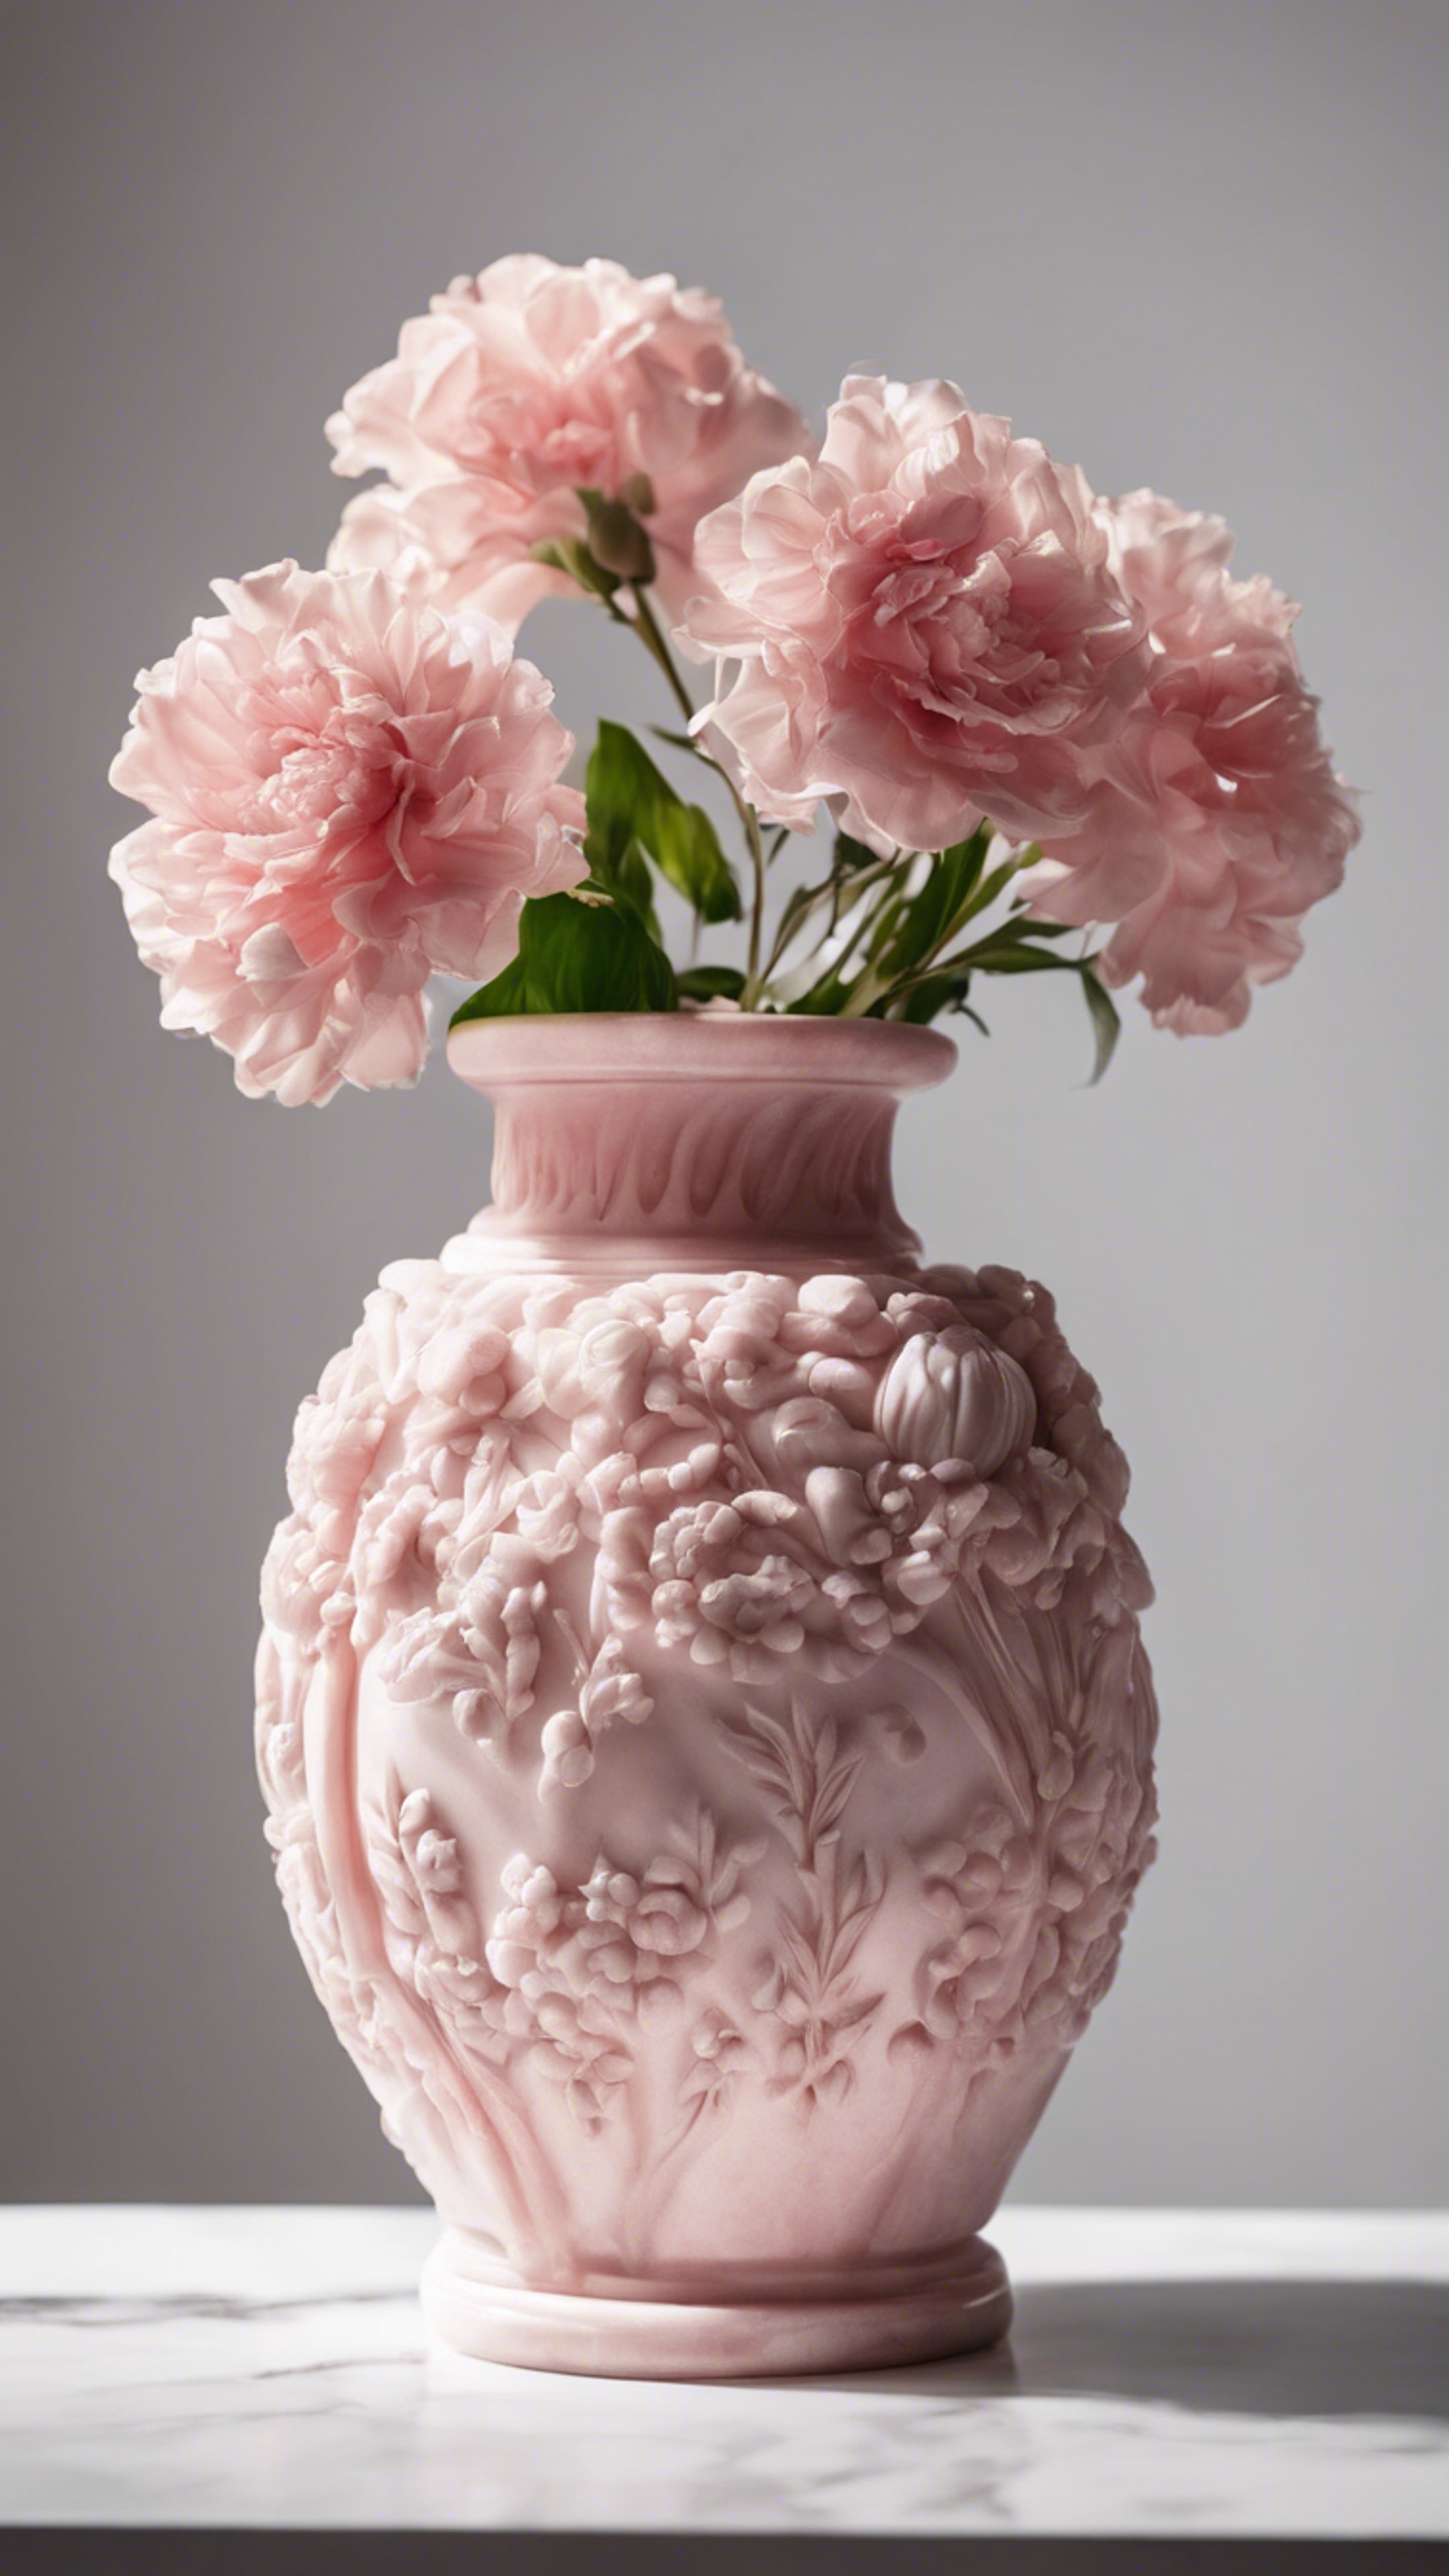 Elegantly carved pink marble flower vase against a white background. Wallpaper[b14a0bd2340d44aeb9d9]